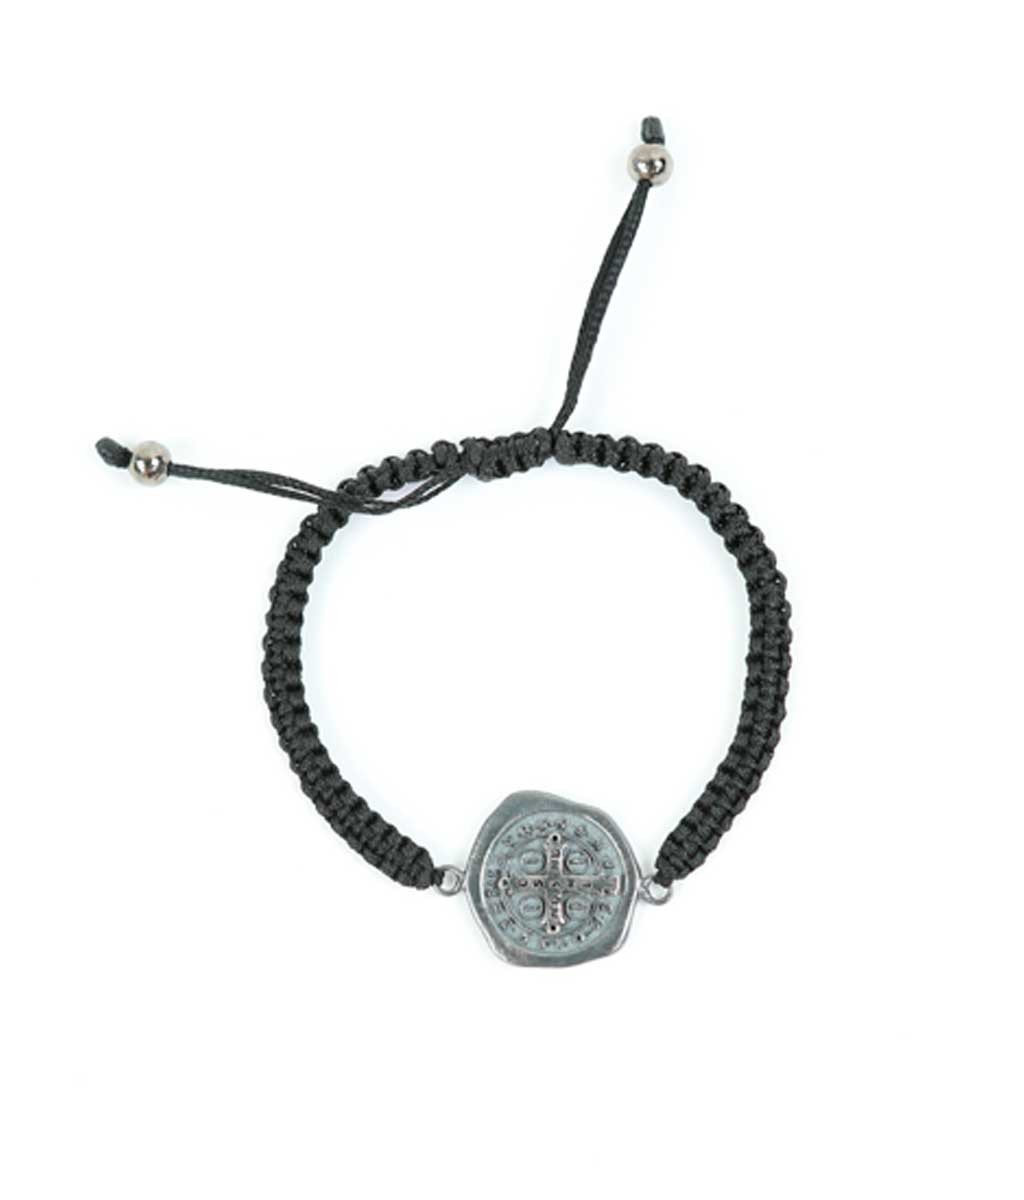 San Benito stamp protection bracelet - Laura Cantu Jewelry - Mx